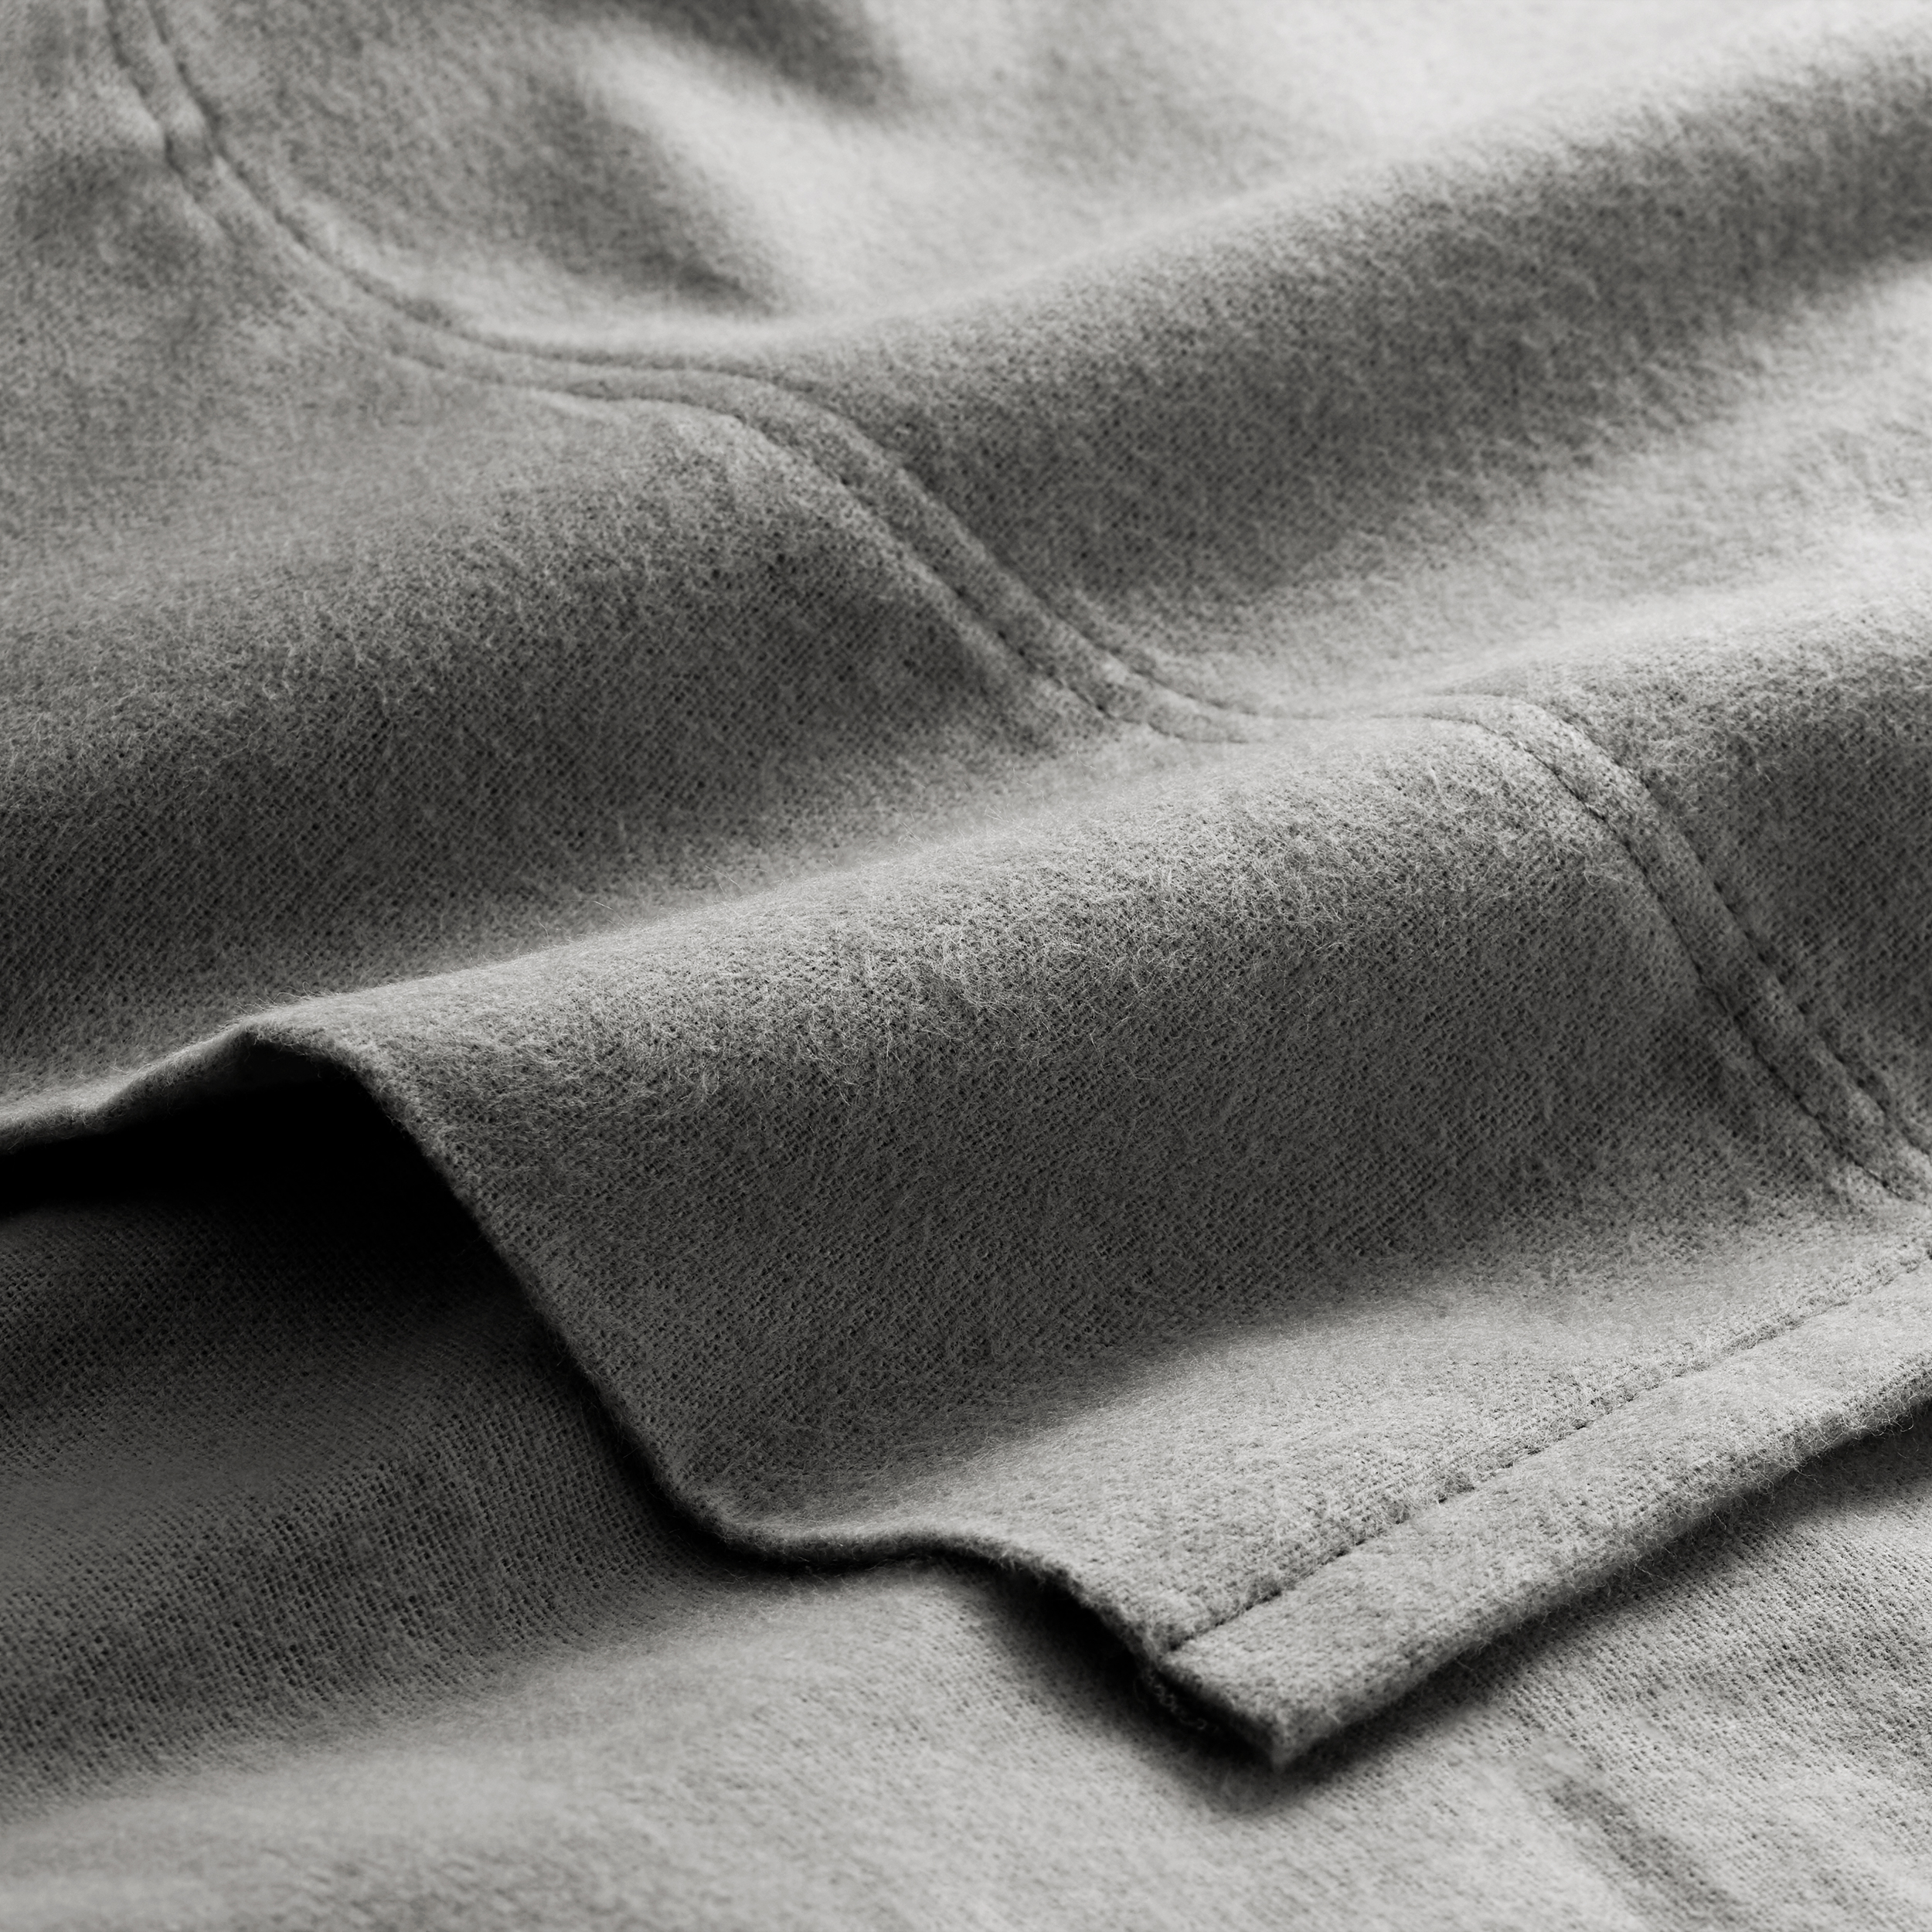 Bare Home 100% Cotton Flannel Sheet Set, Heavyweight, Deep Pocket (Queen, Gray) - image 4 of 5